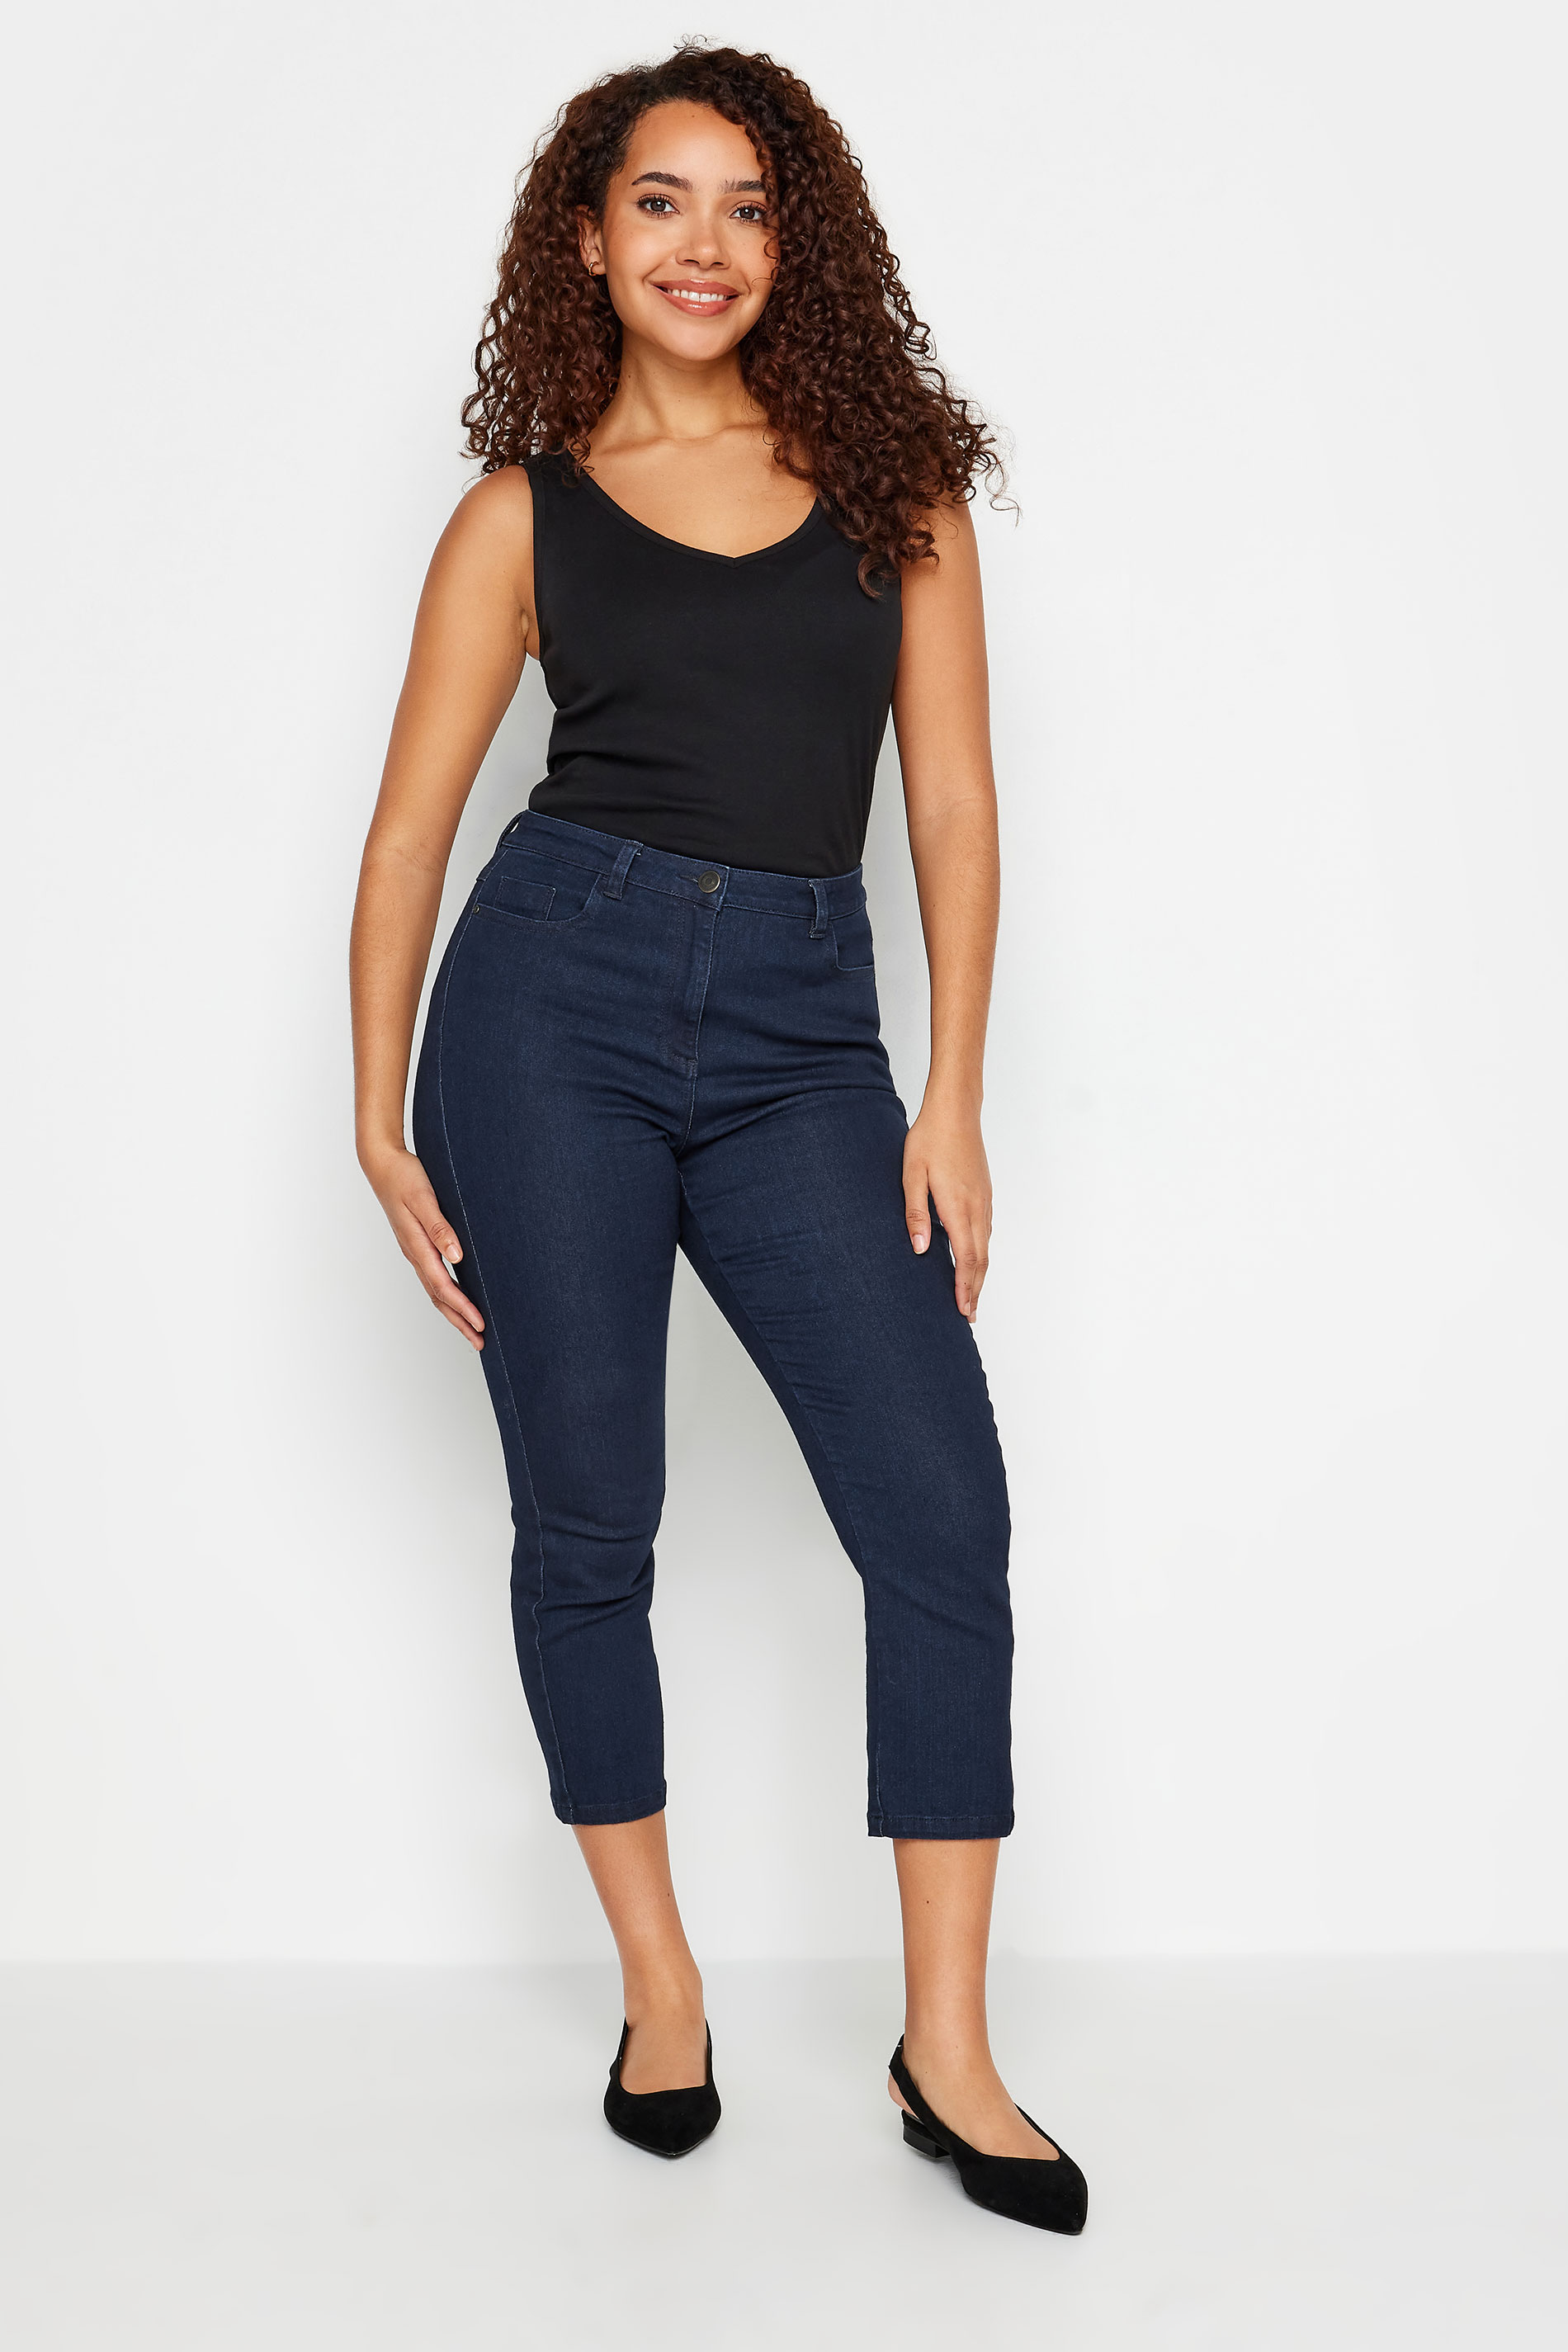 M&Co Indigo Blue Cropped Jeans | M&Co 2